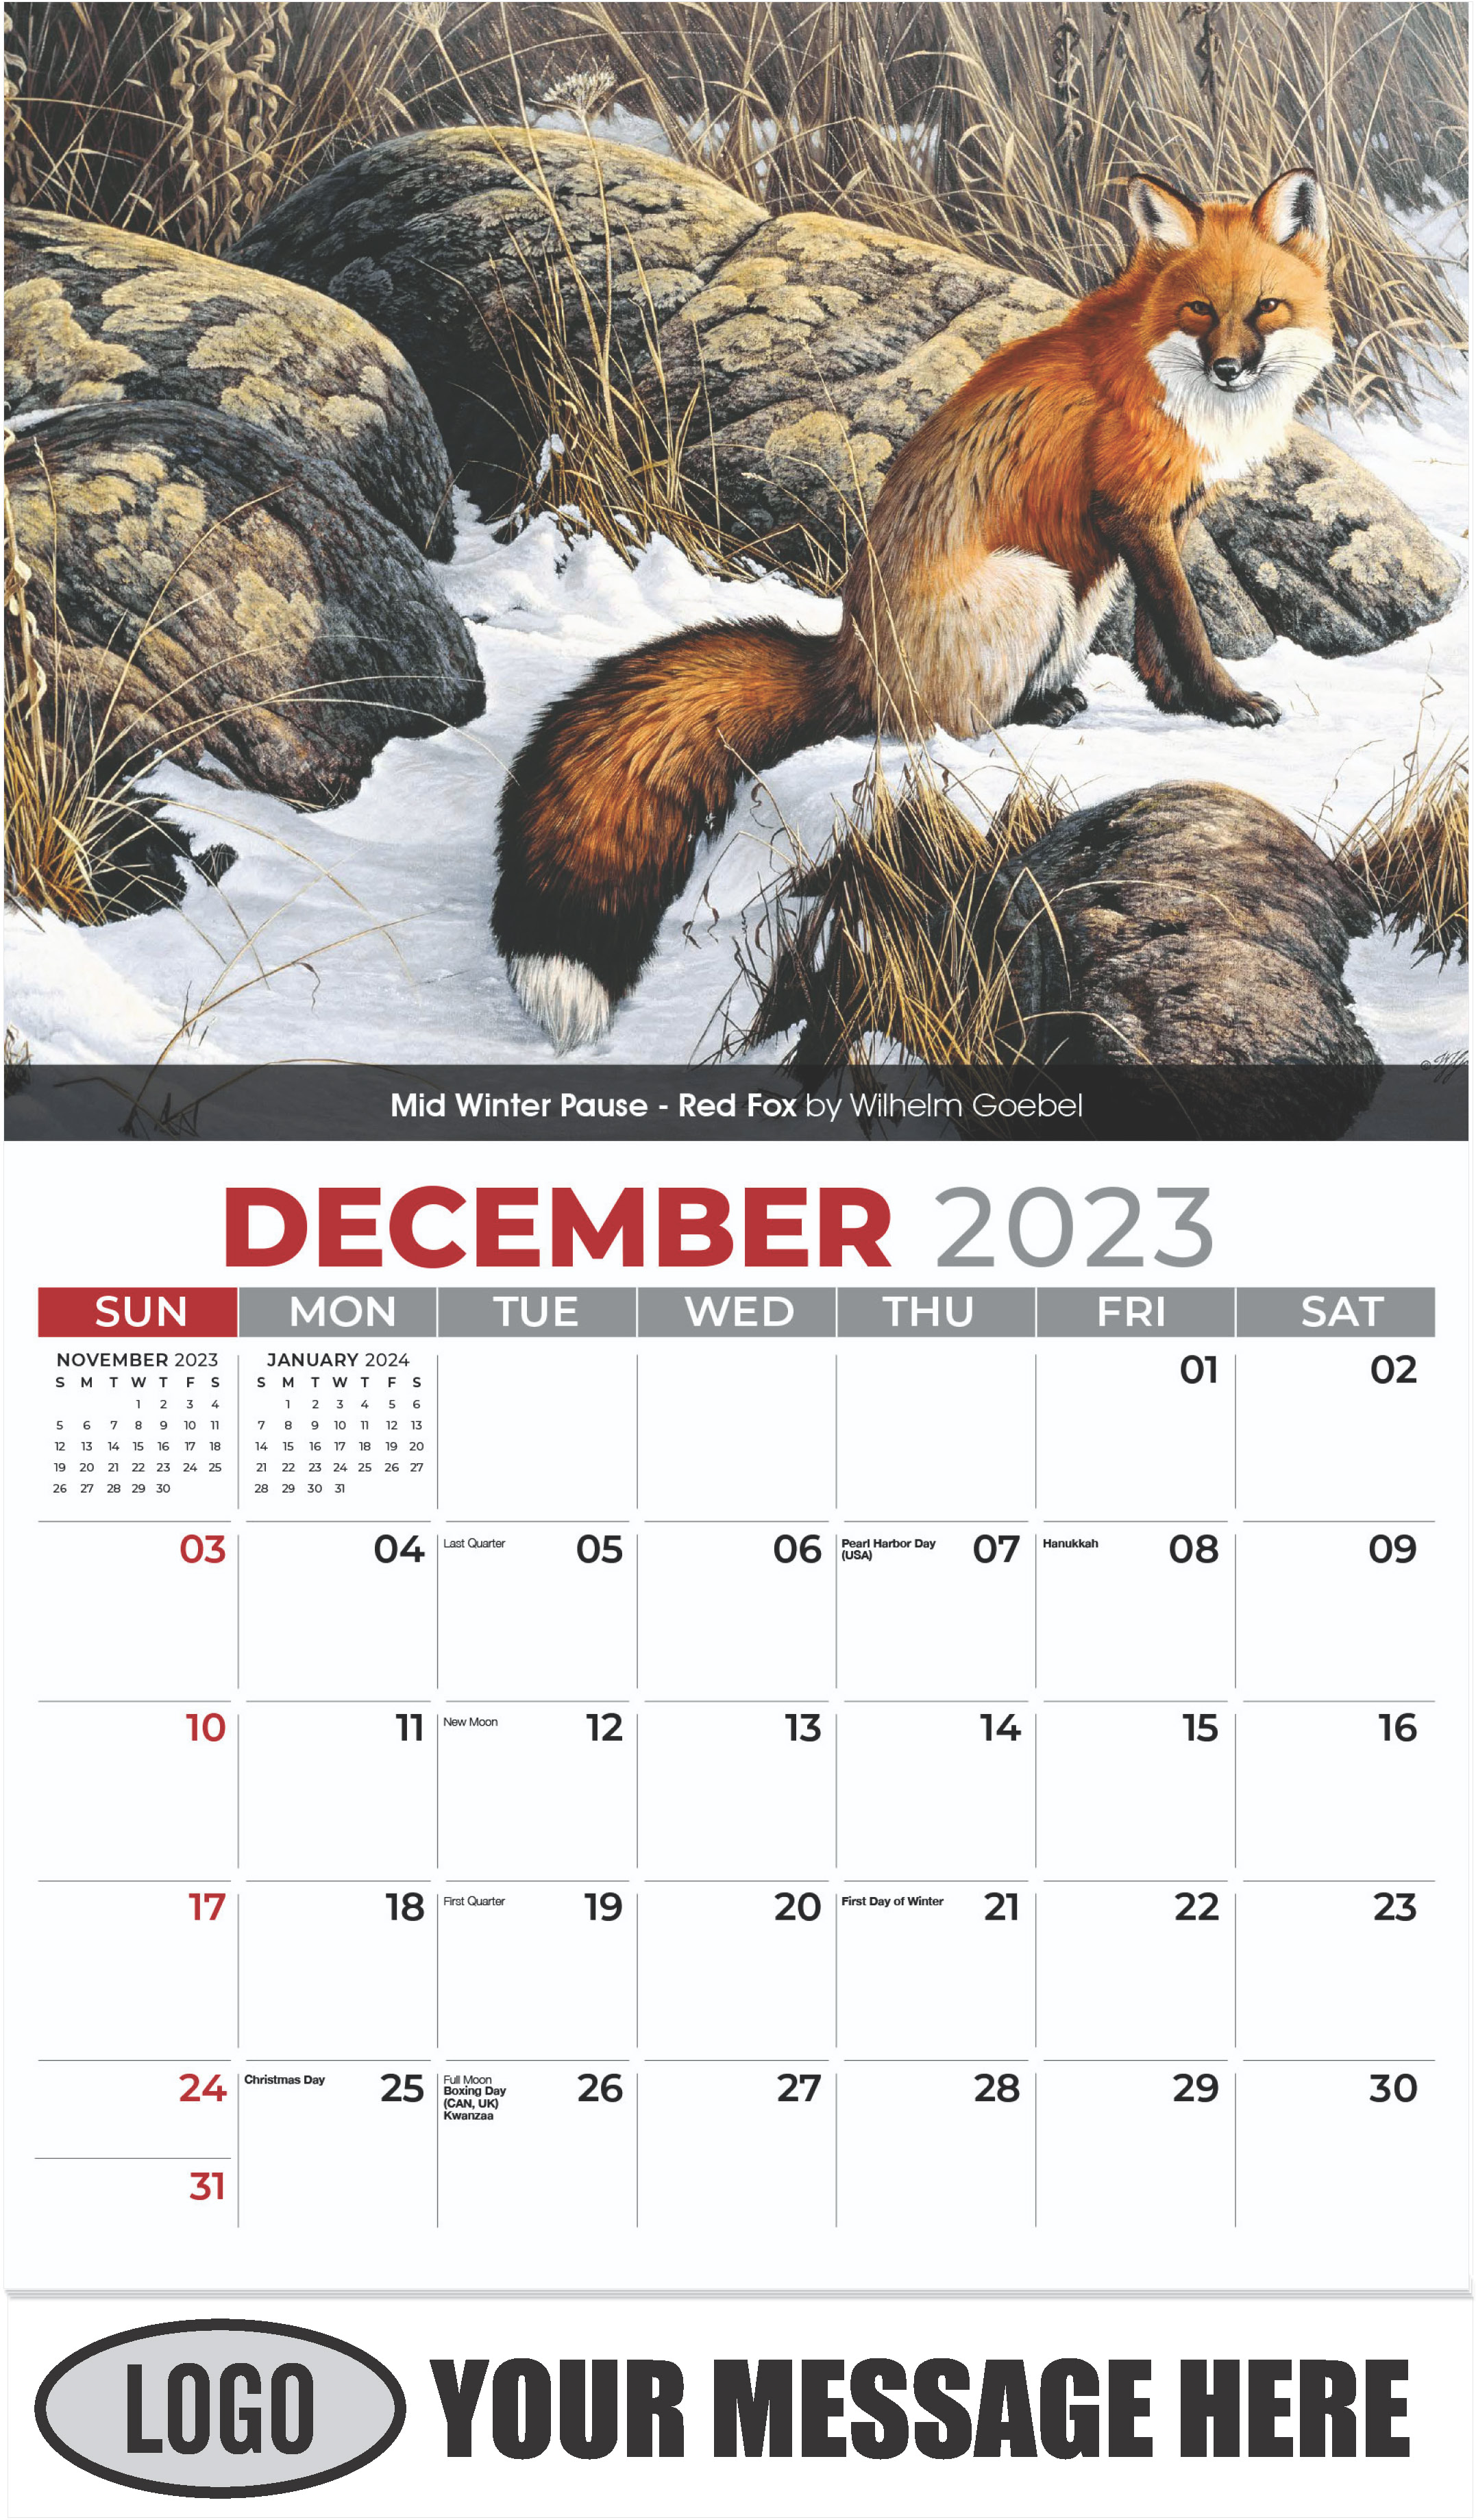 Mid Winter Pause - Red Fox by Wilhelm Goebel - December 2023 - Wildlife Portraits 2023 Promotional Calendar